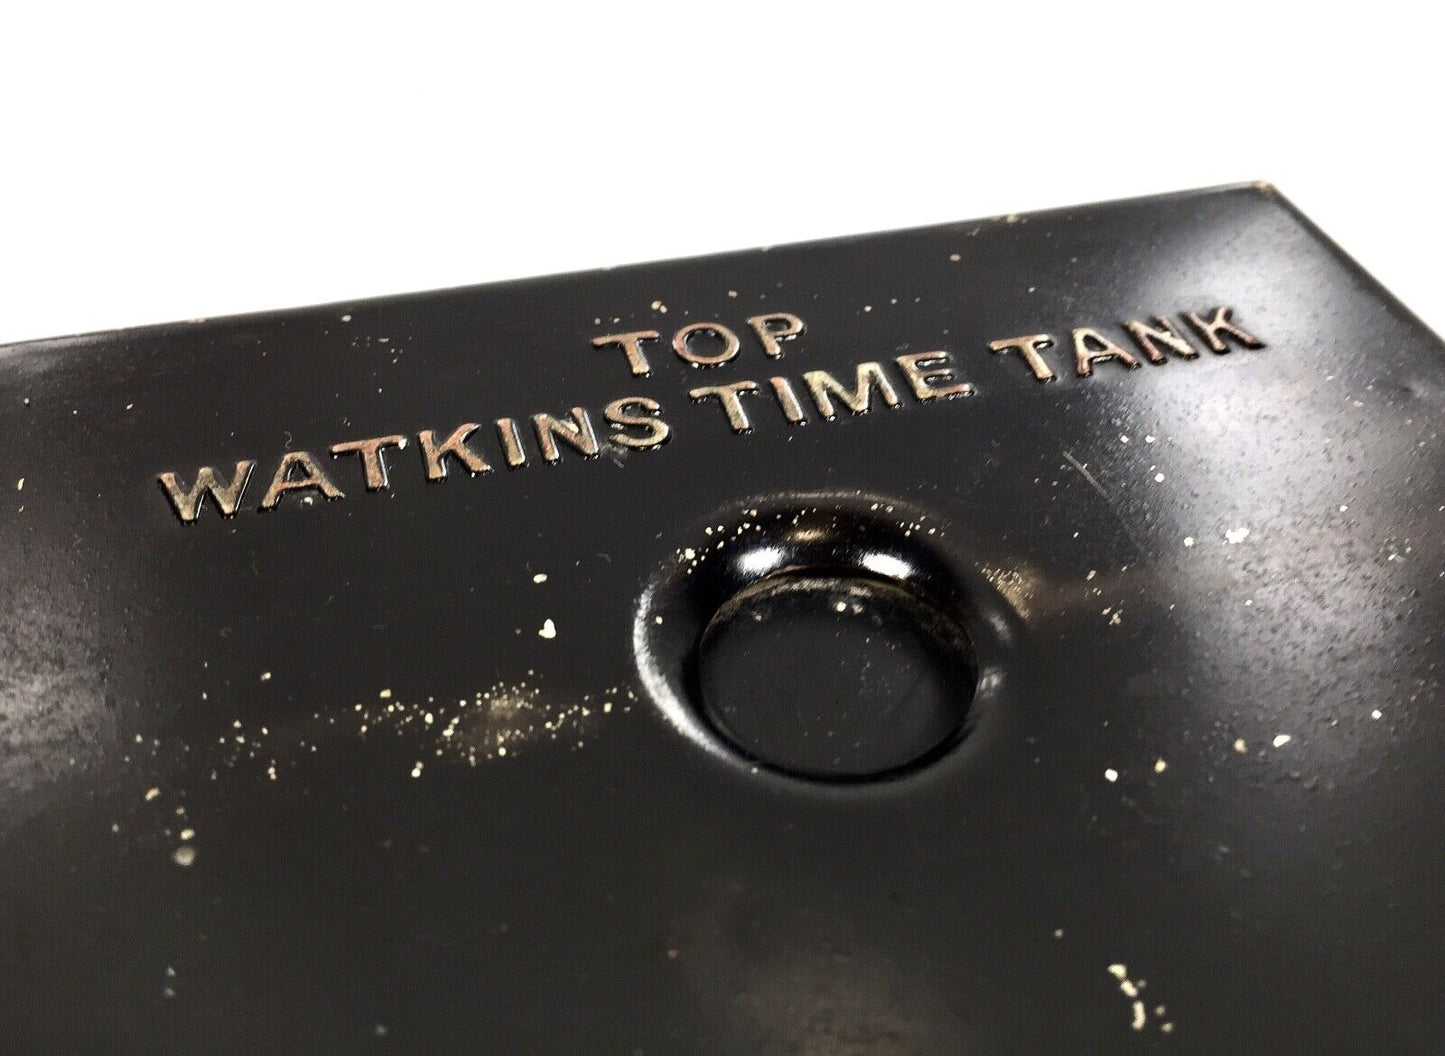 Antique Camera Equipment - Watkins Time Tank for Exposing Photos / c.1925 Rare